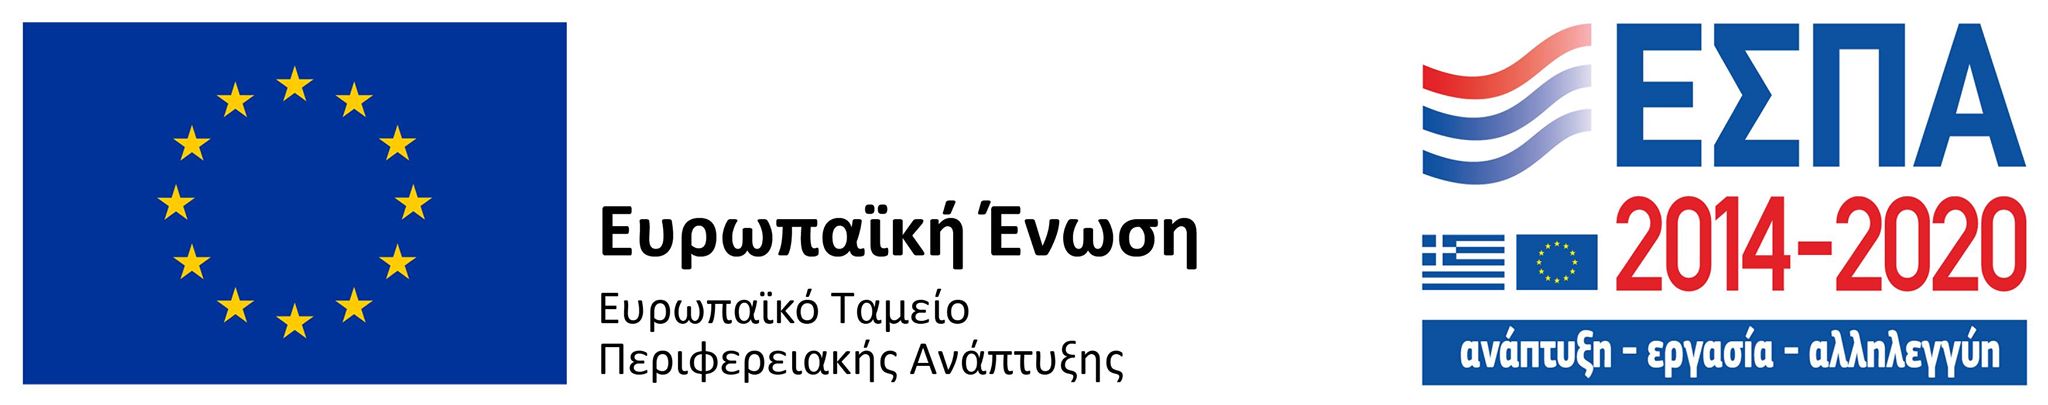 Espa Greek Banner